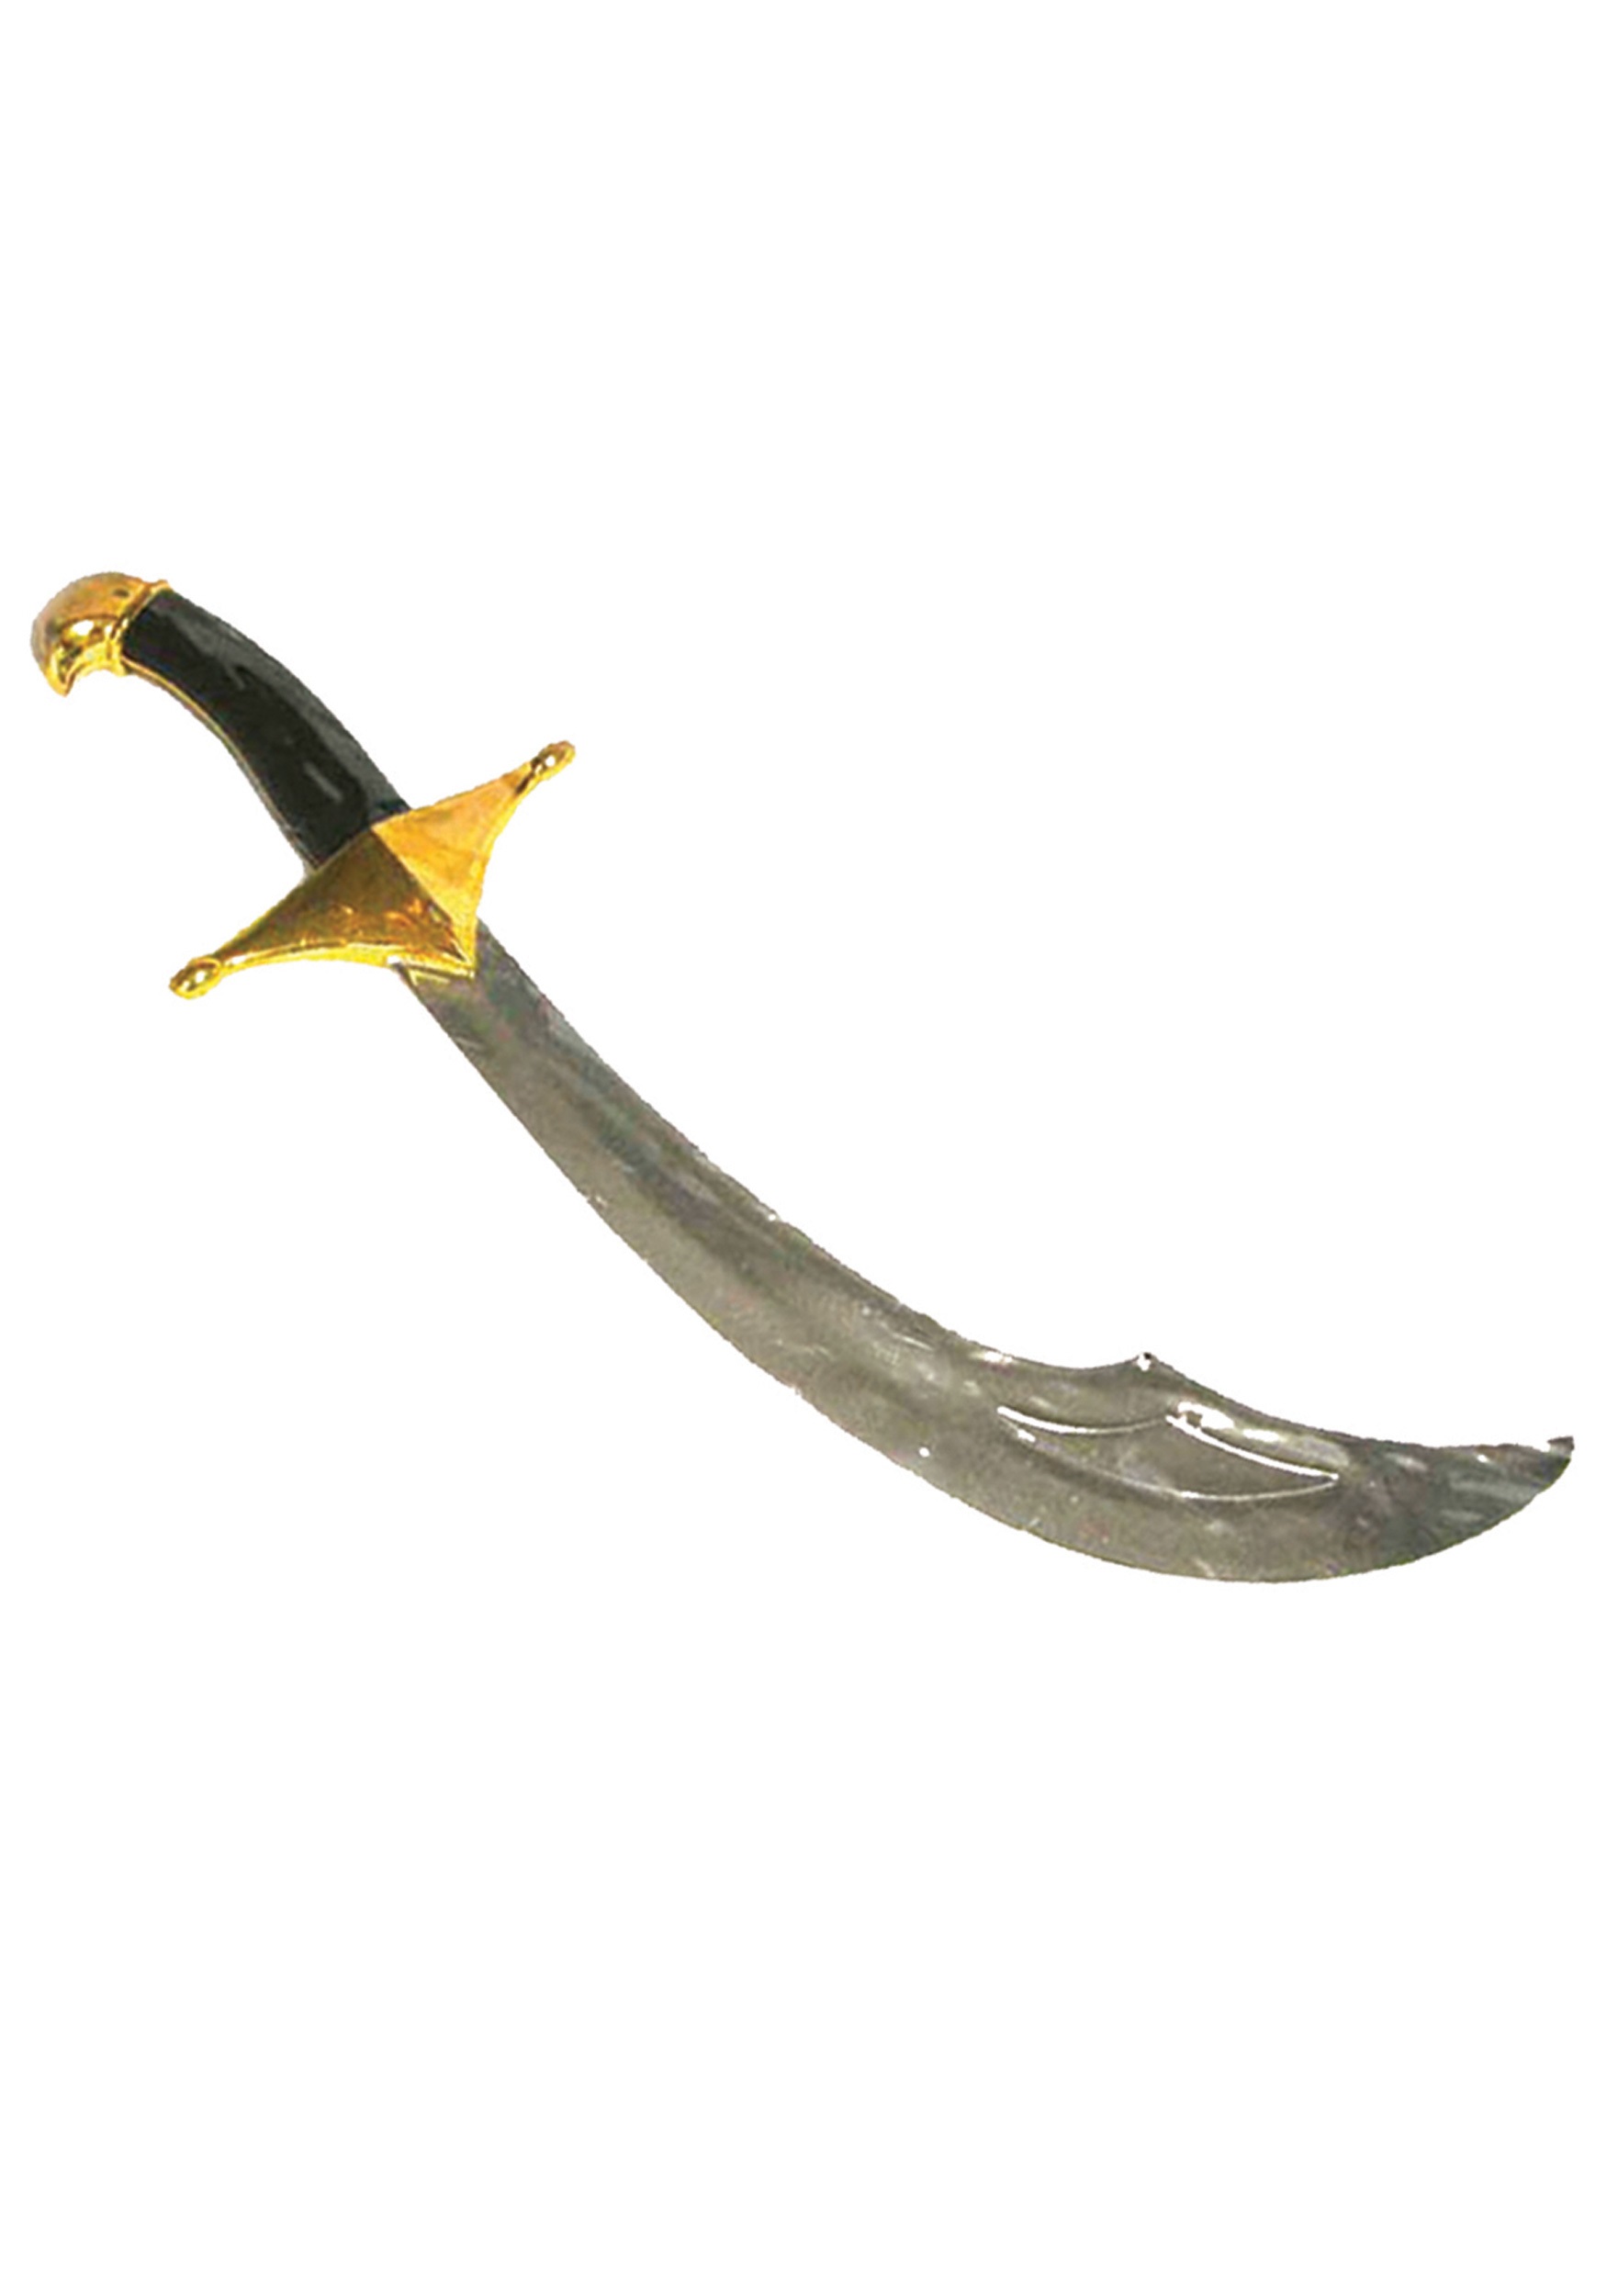 PIRATE SWORD 21” Toy Cutlass Gold Black Handle Halloween Costume Accessory New I 